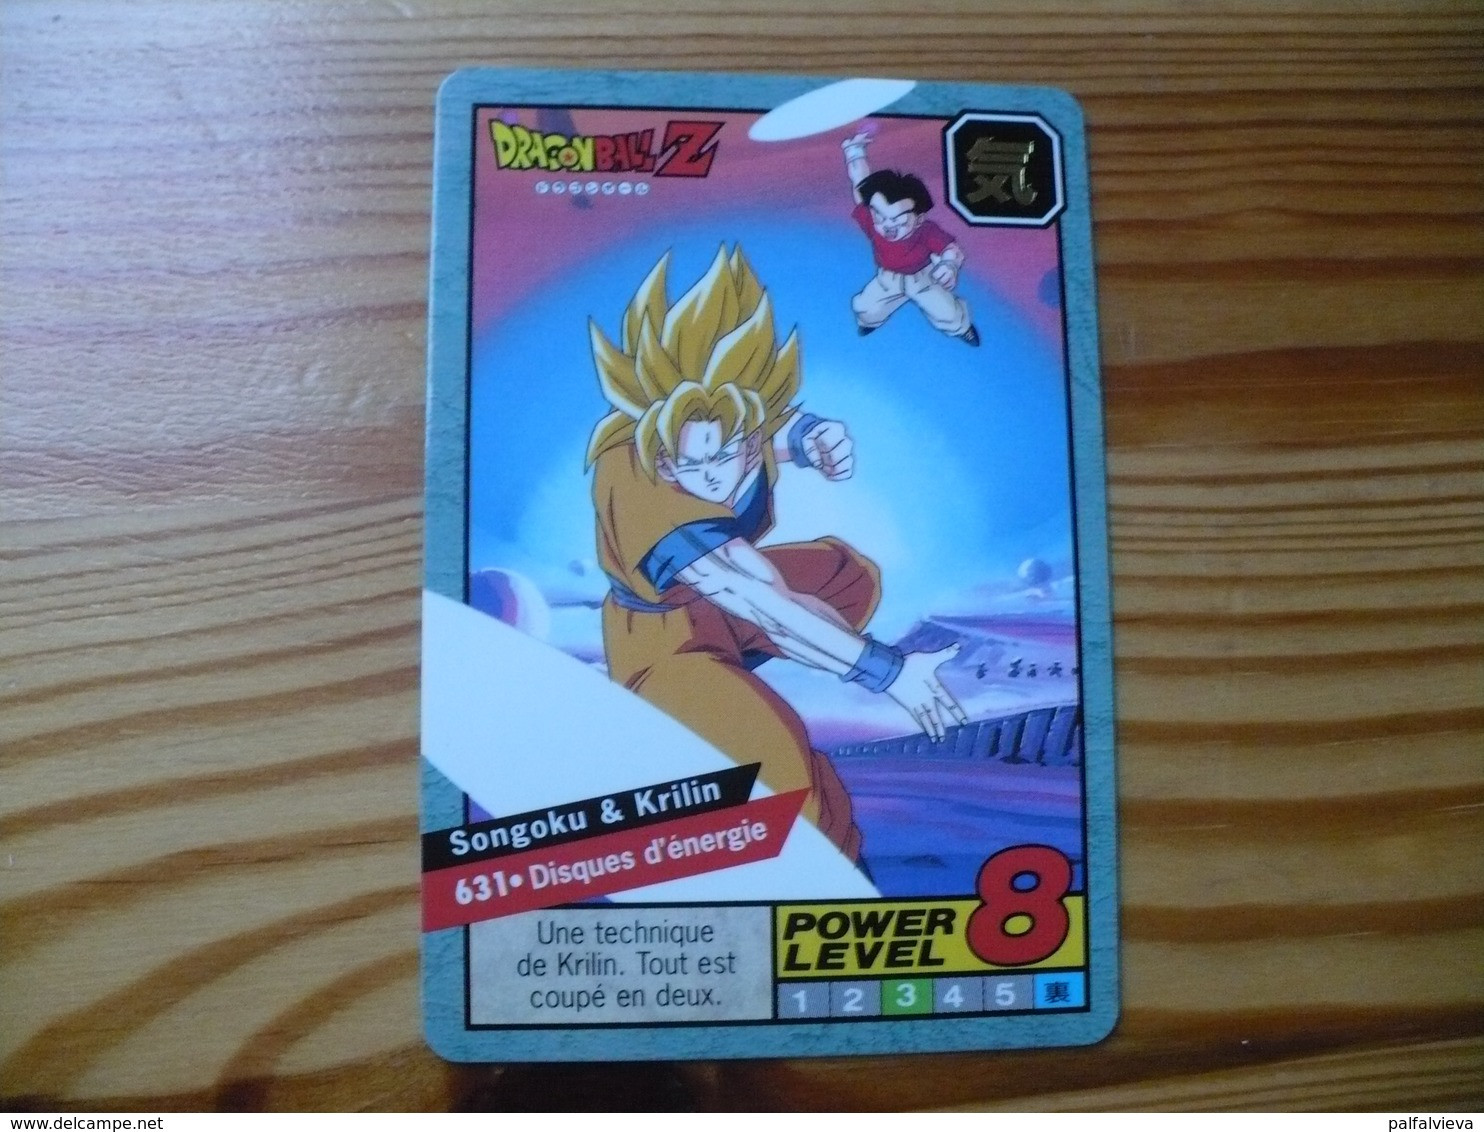 Anime / Manga Trading Card: Dragon Ball Z. 631. - Dragonball Z